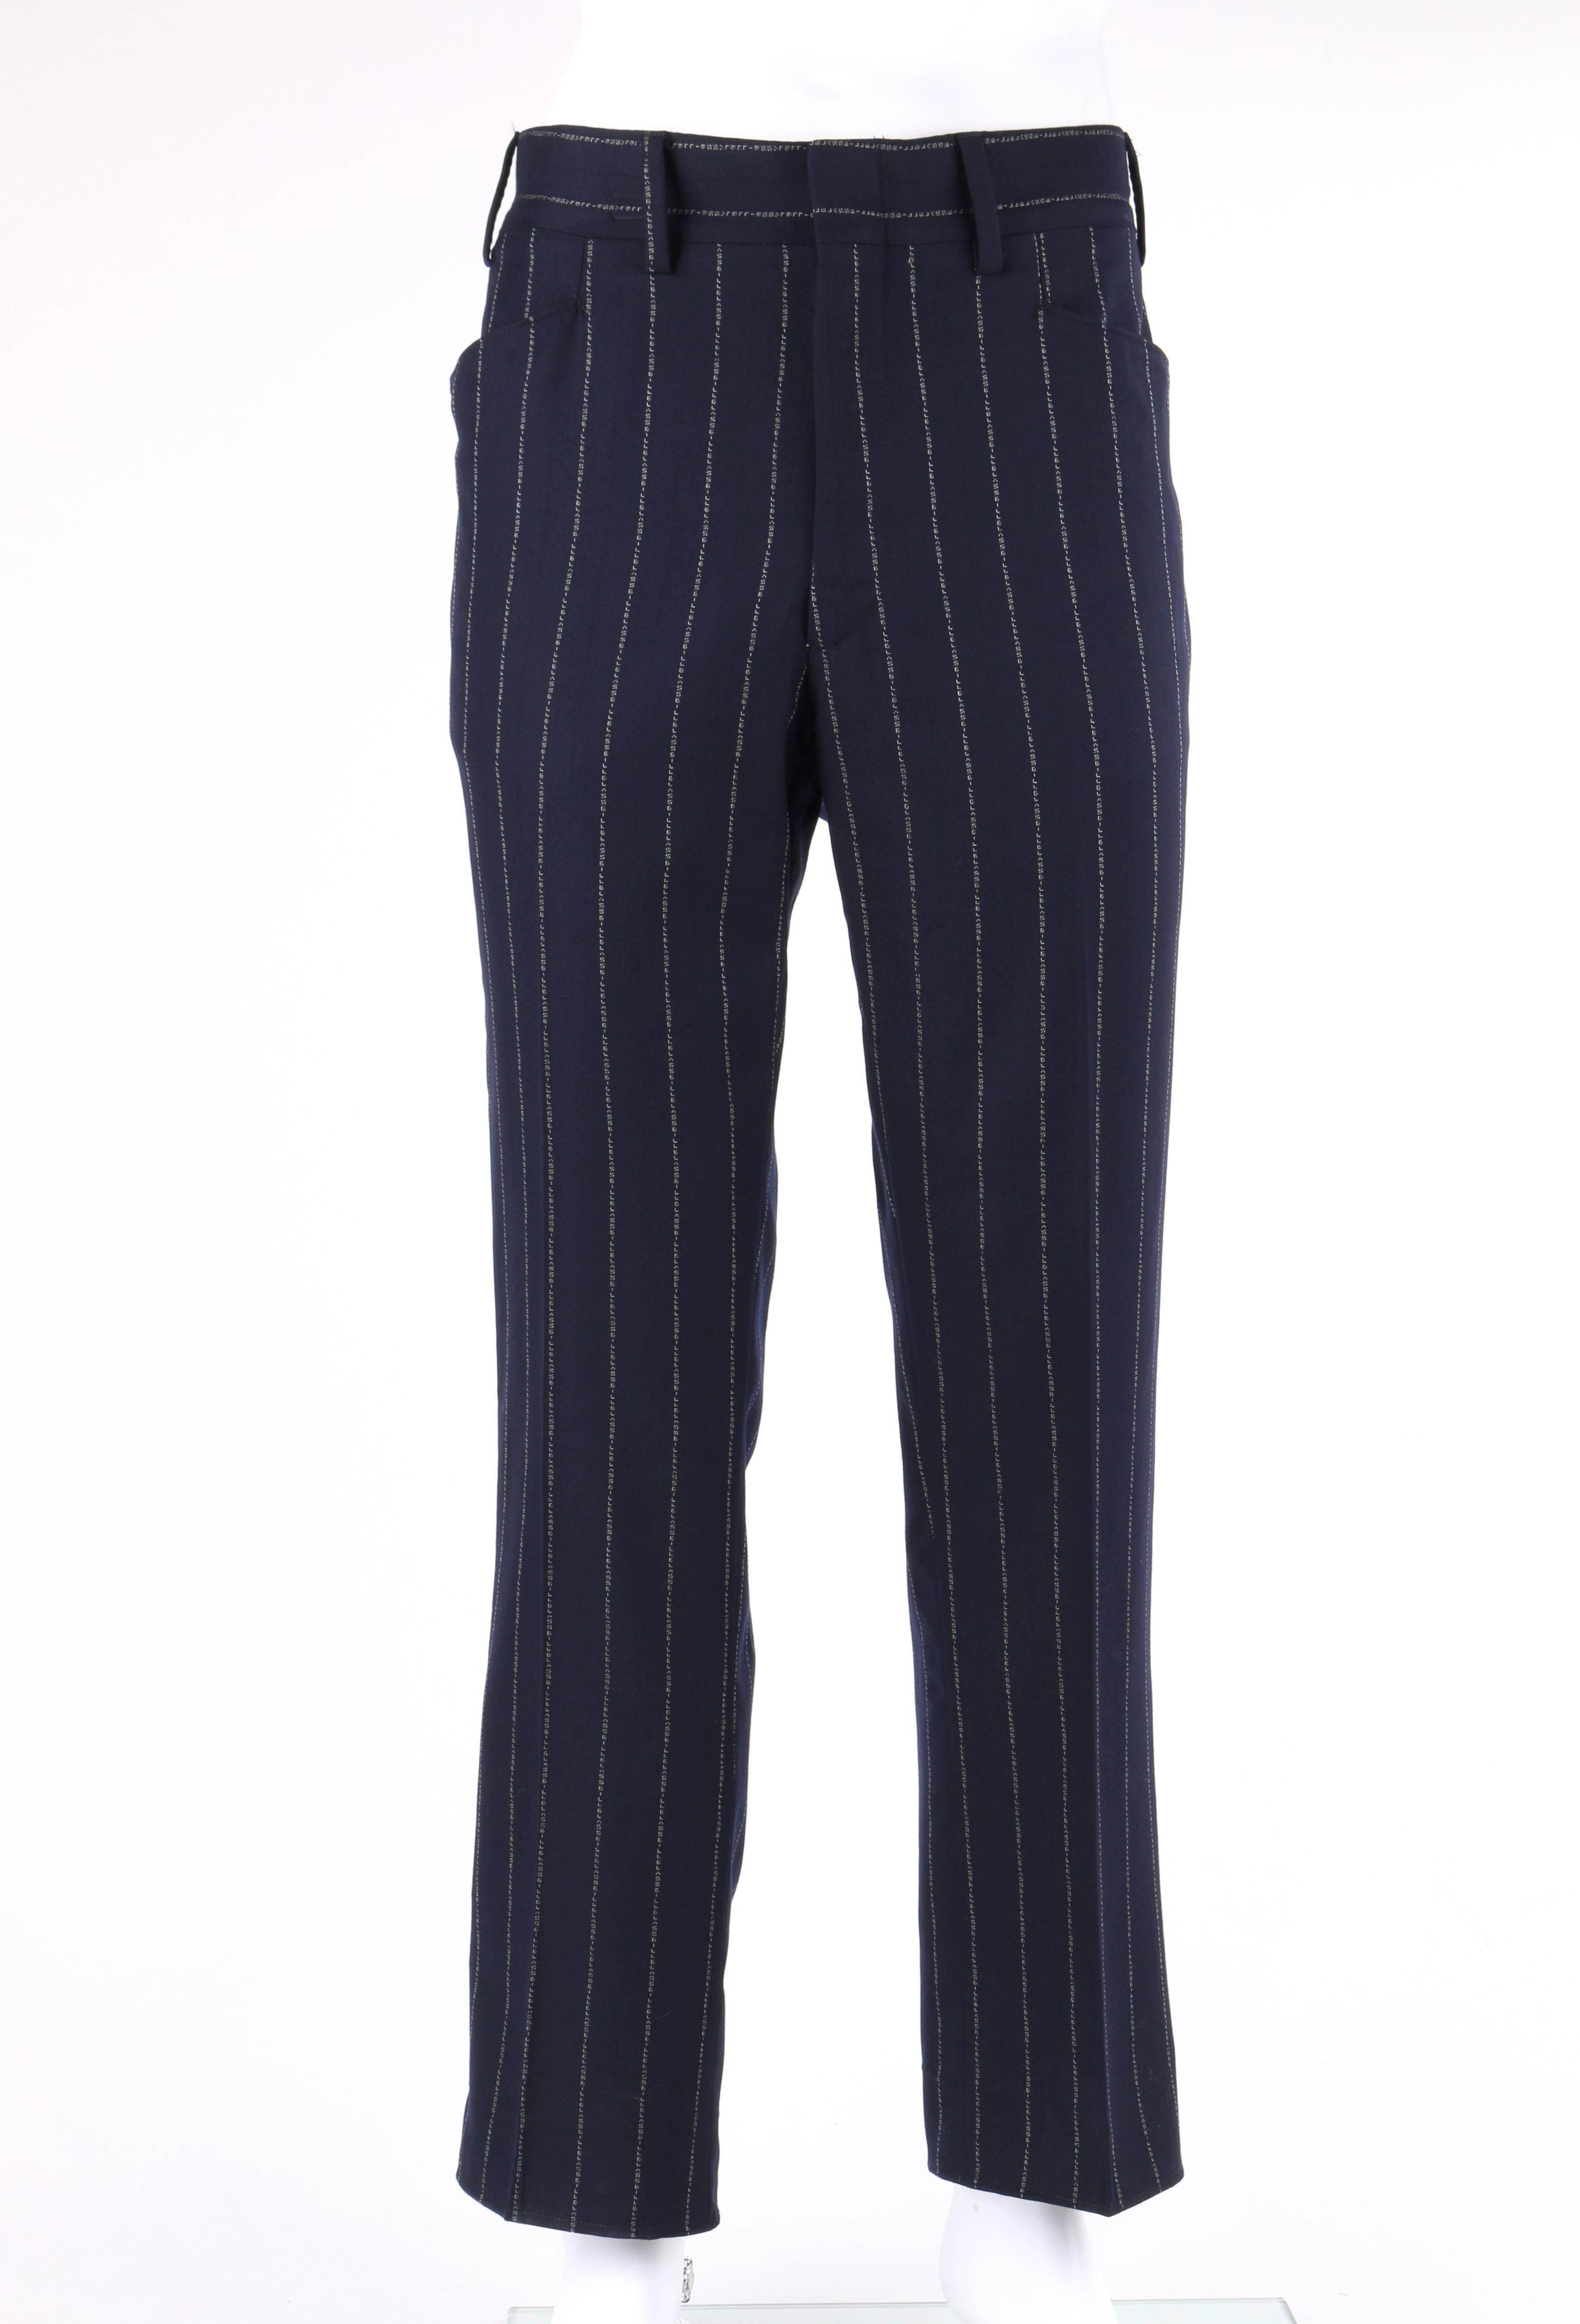 BILL BLASS c.1970's 2 Pc Navy Blue Wool Signature Pinstripe Jacket Pant Suit Set 1